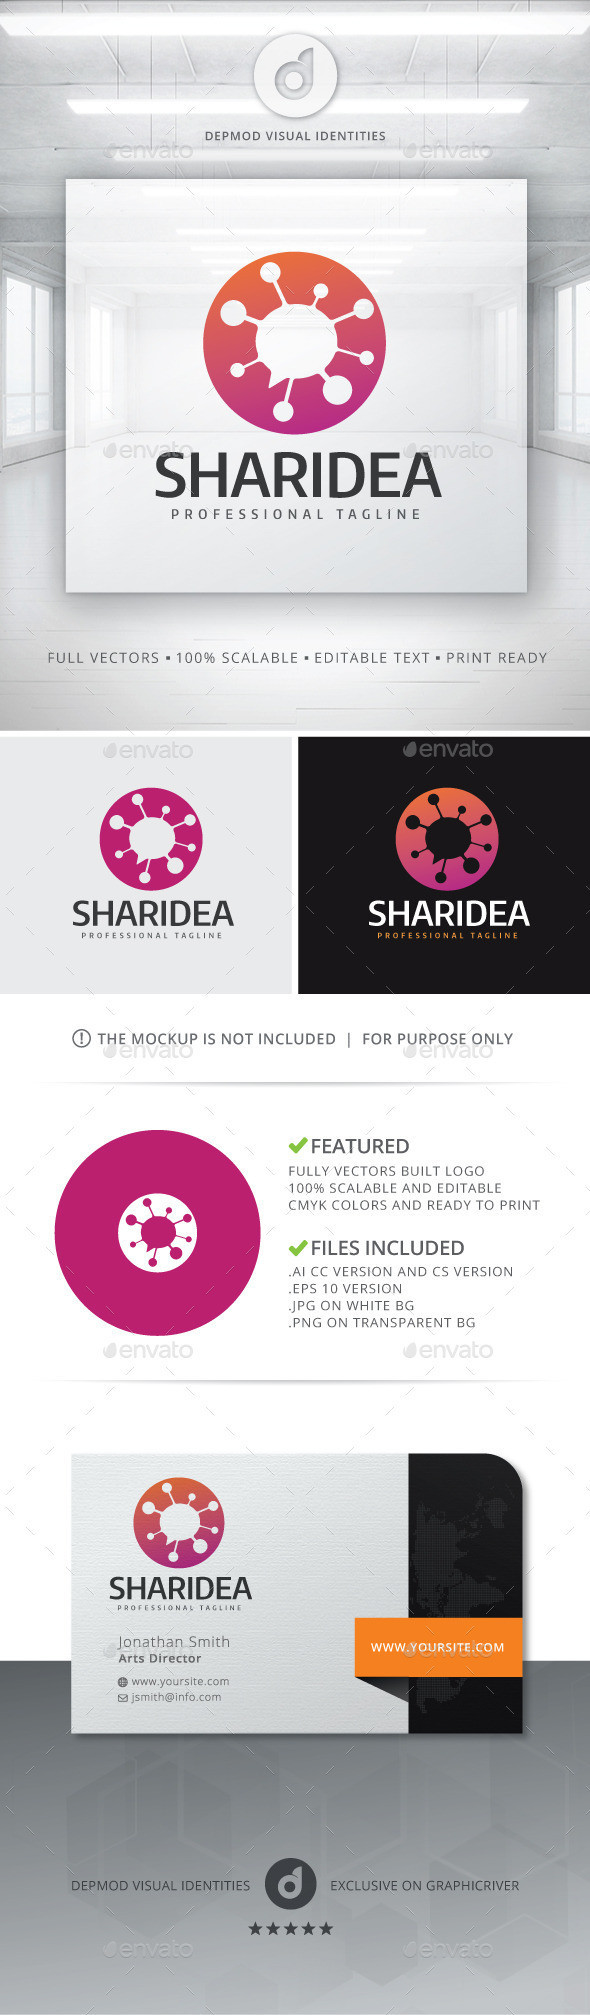 Share idea logo